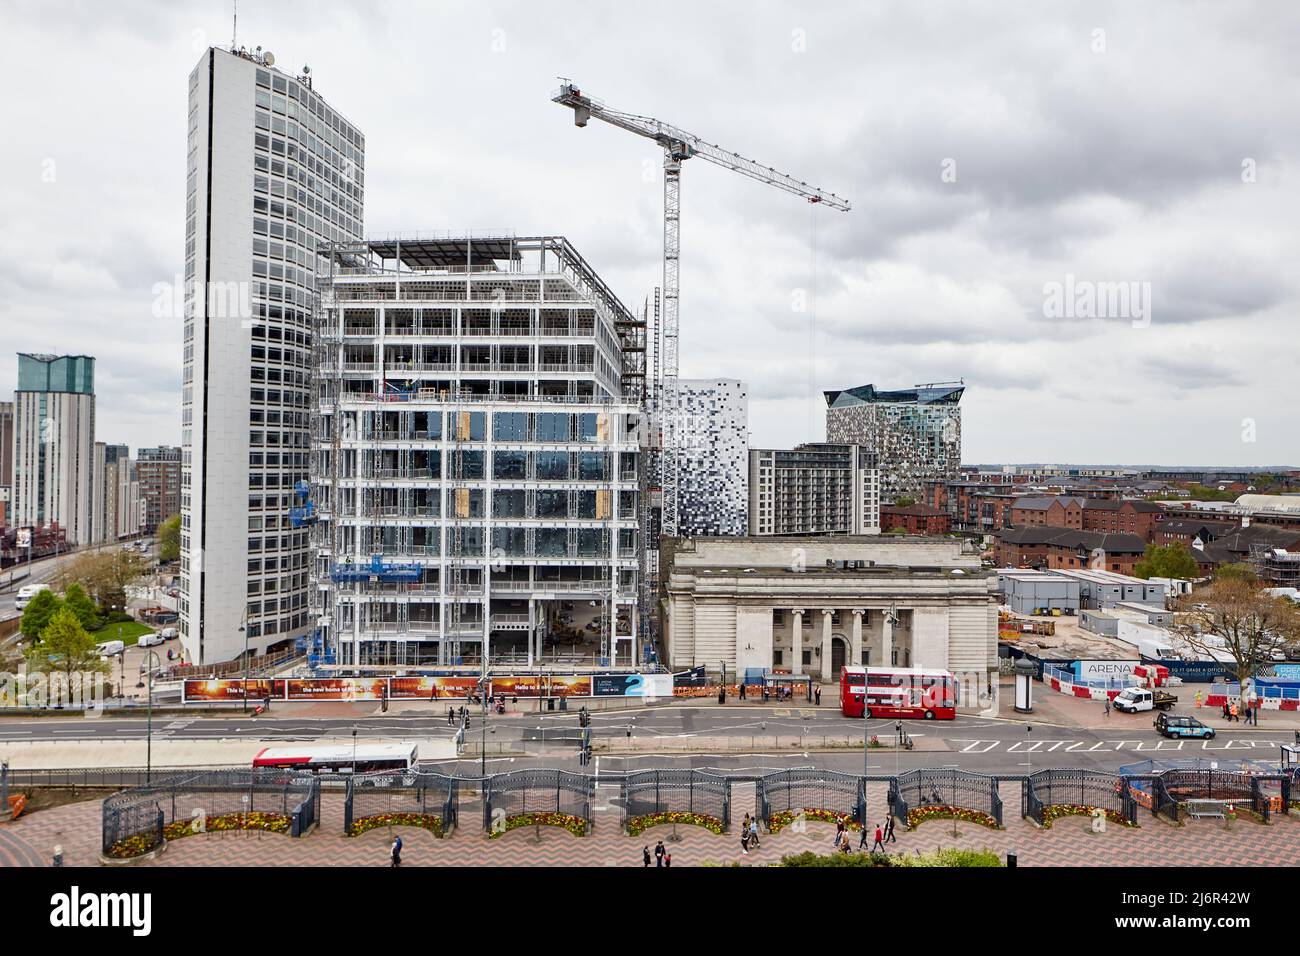 One Centenary Square under construction in 2017, Birmingham, UK Stock Photo